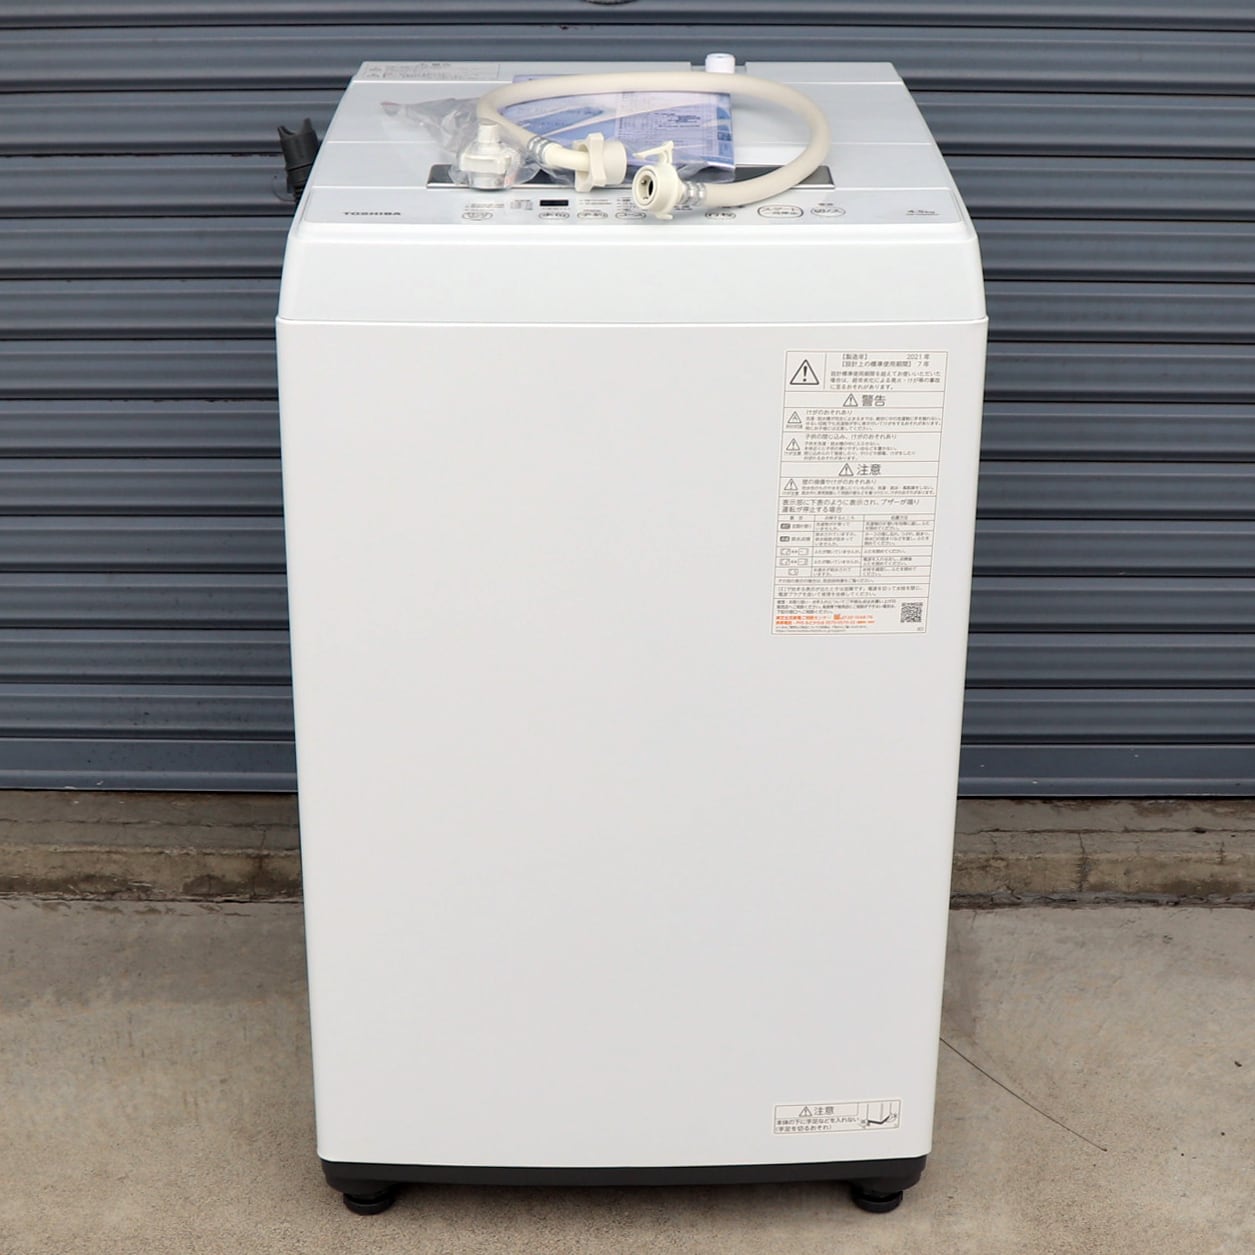 TOSHIBA・東芝・全自動電気洗濯機・AW-45M9(W)・2021年製・No.200708-515・梱包サイズ220